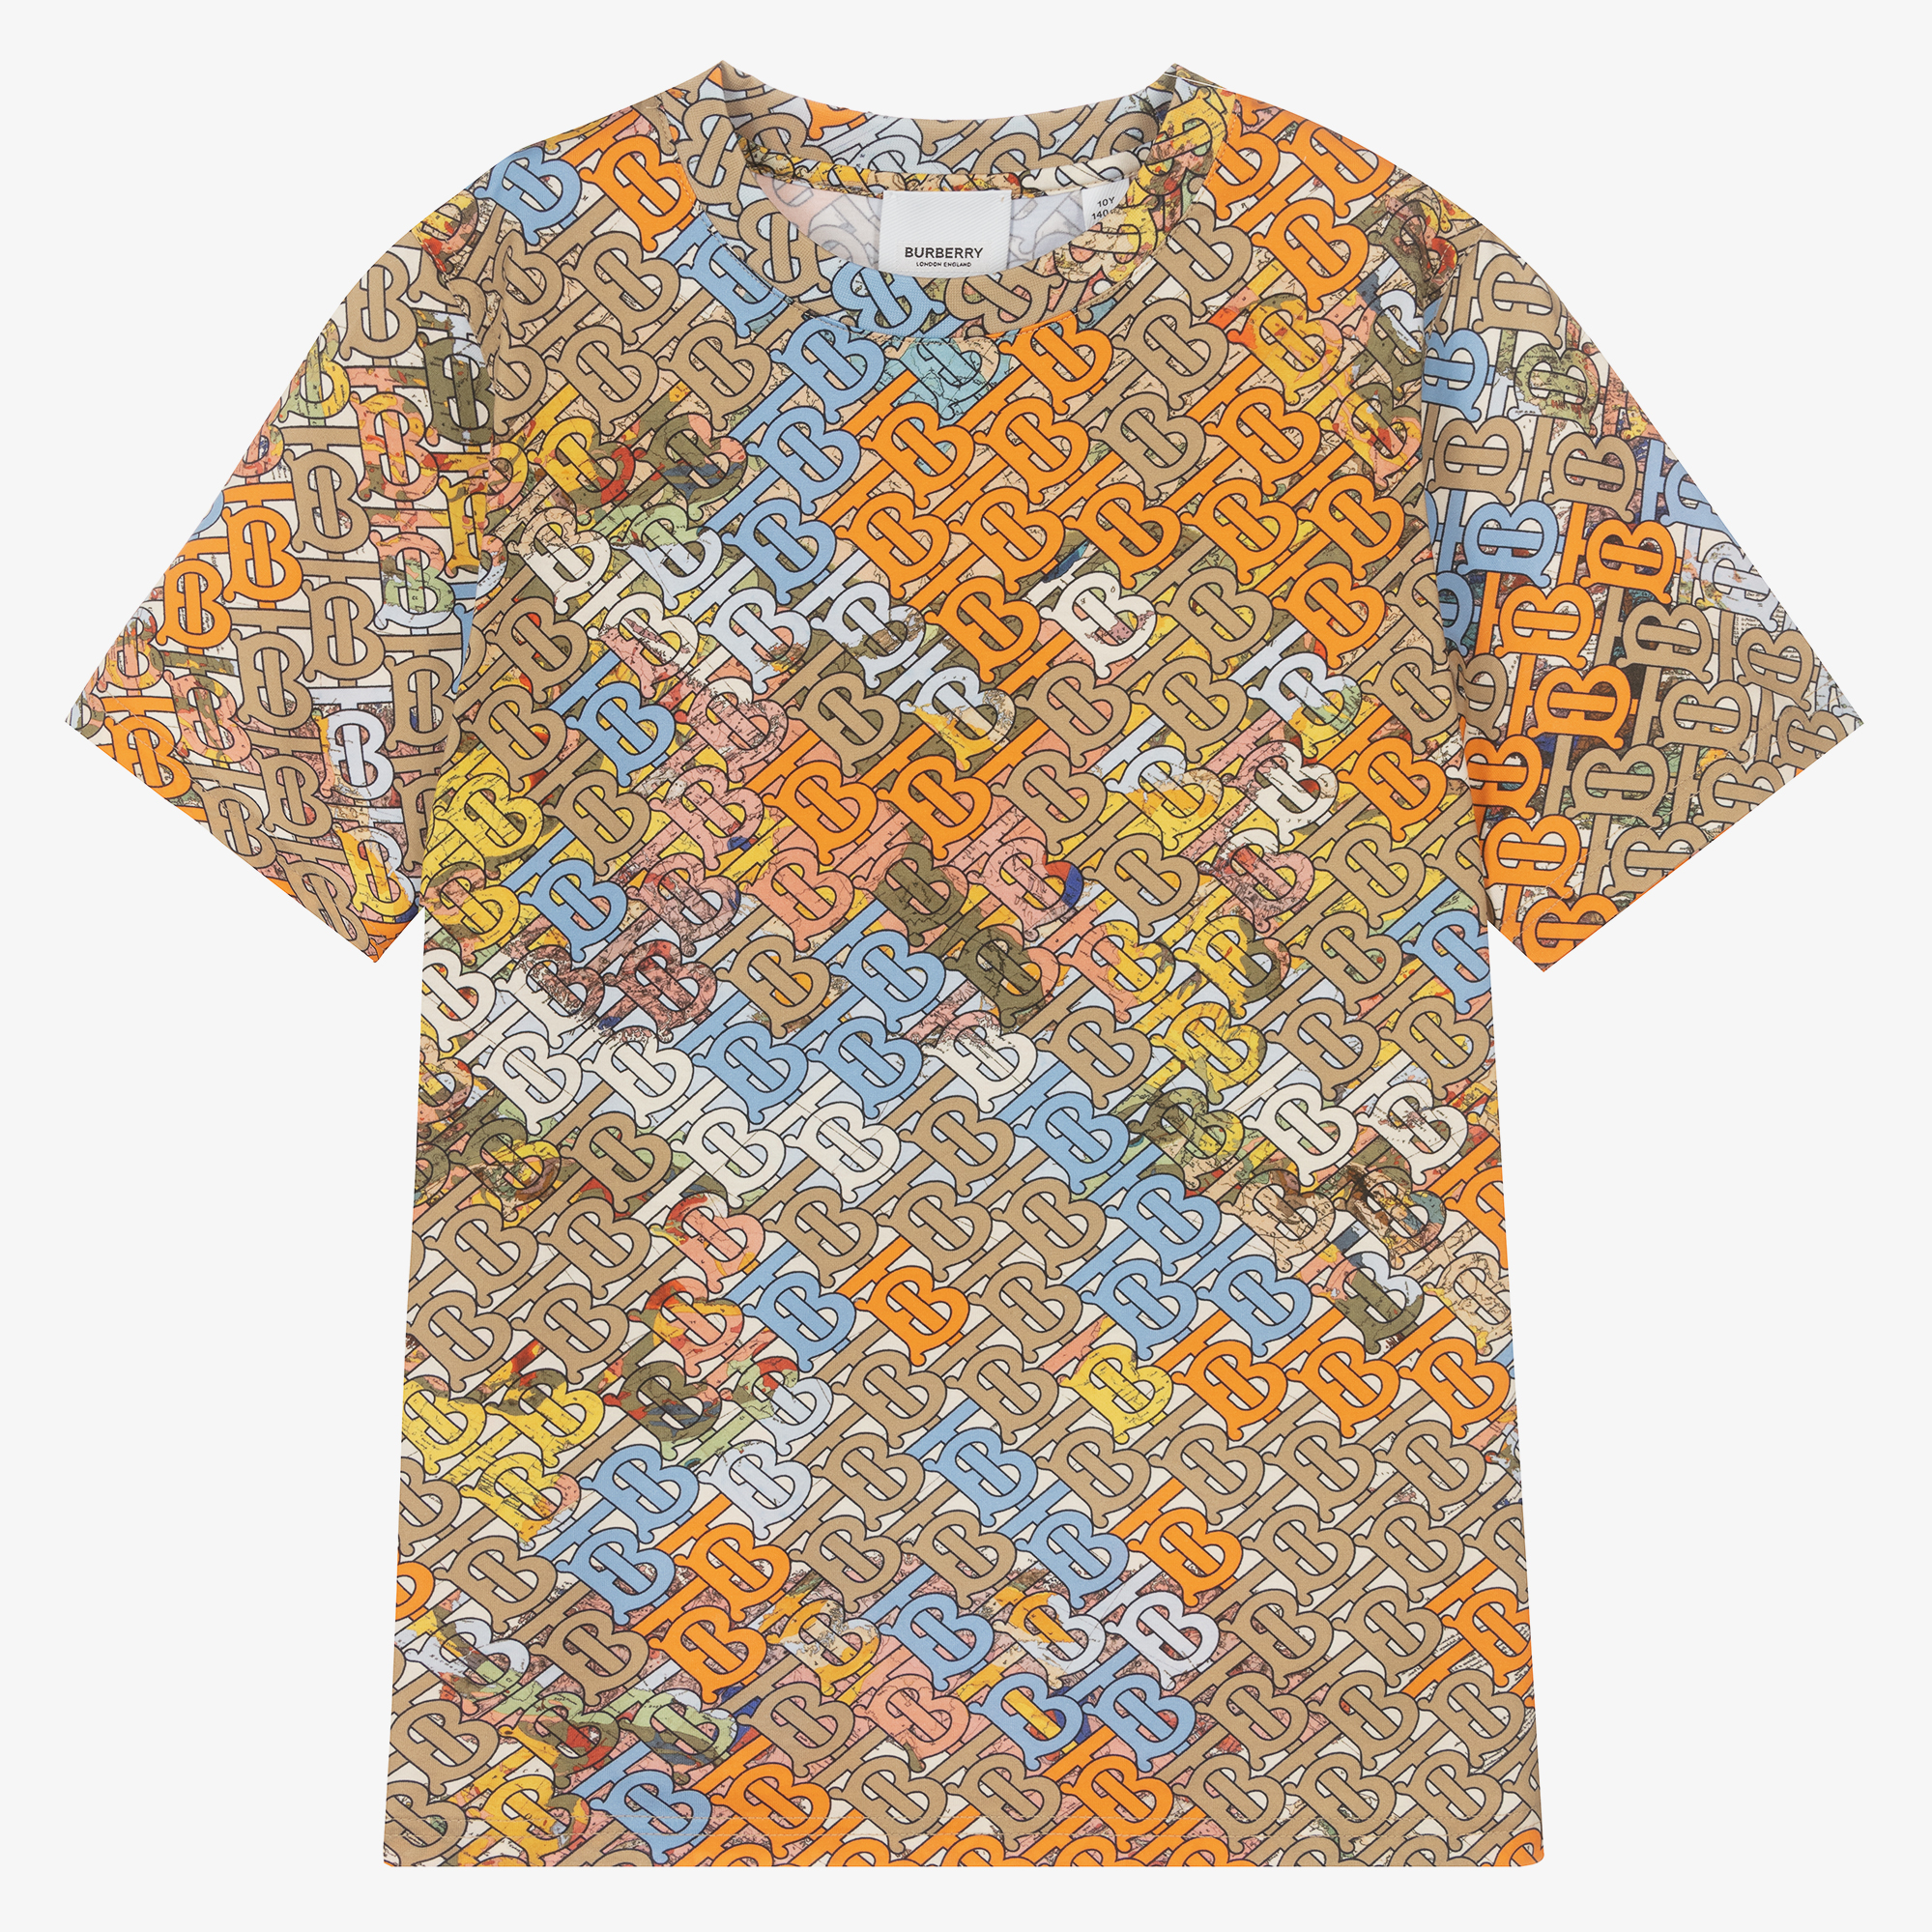 Burberry Kids' Nevin Monogram Print Cotton & Silk Button-Up Shirt